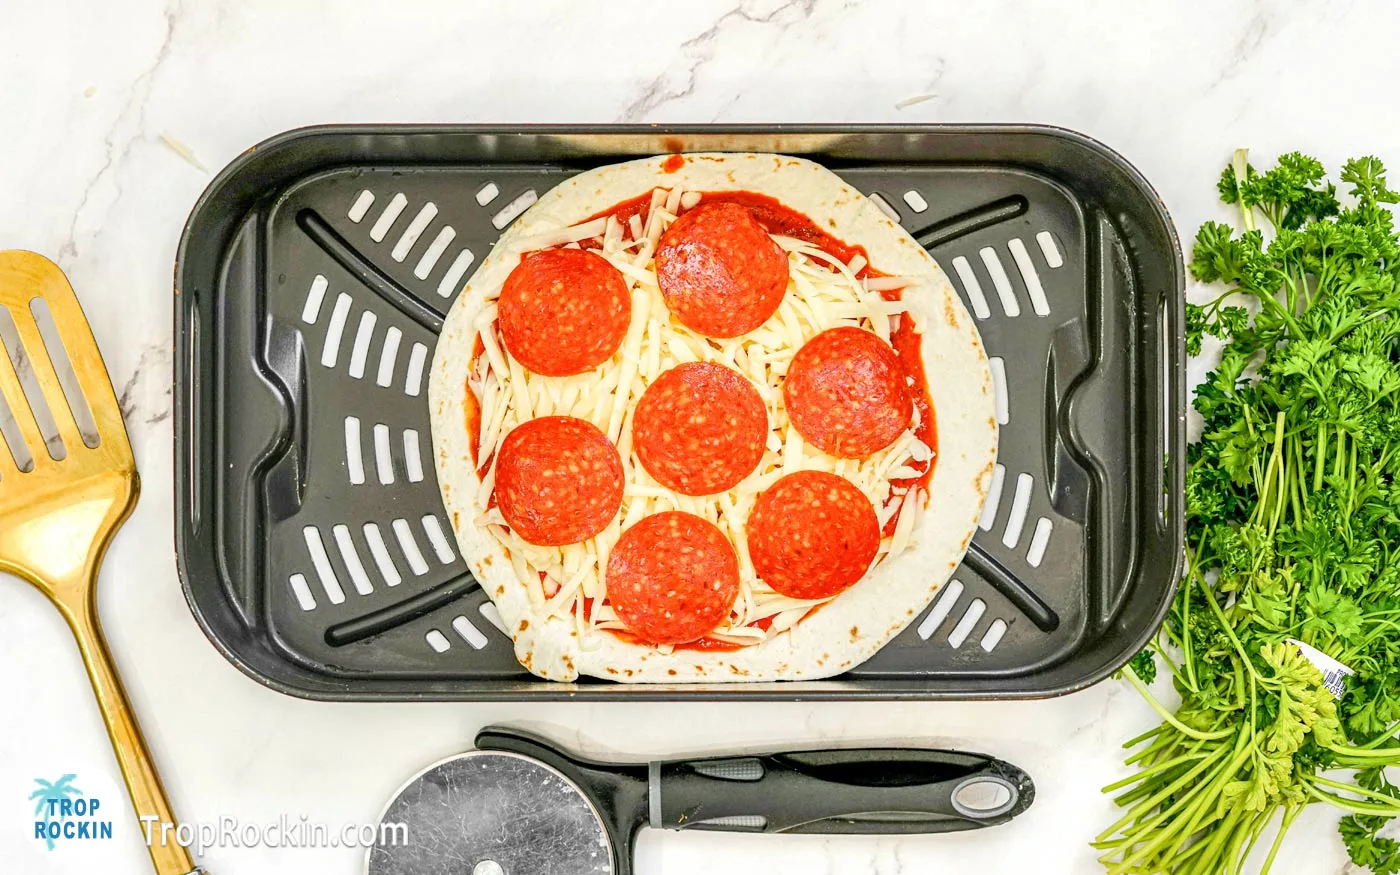 Tortilla pizza in the air fryer basket.